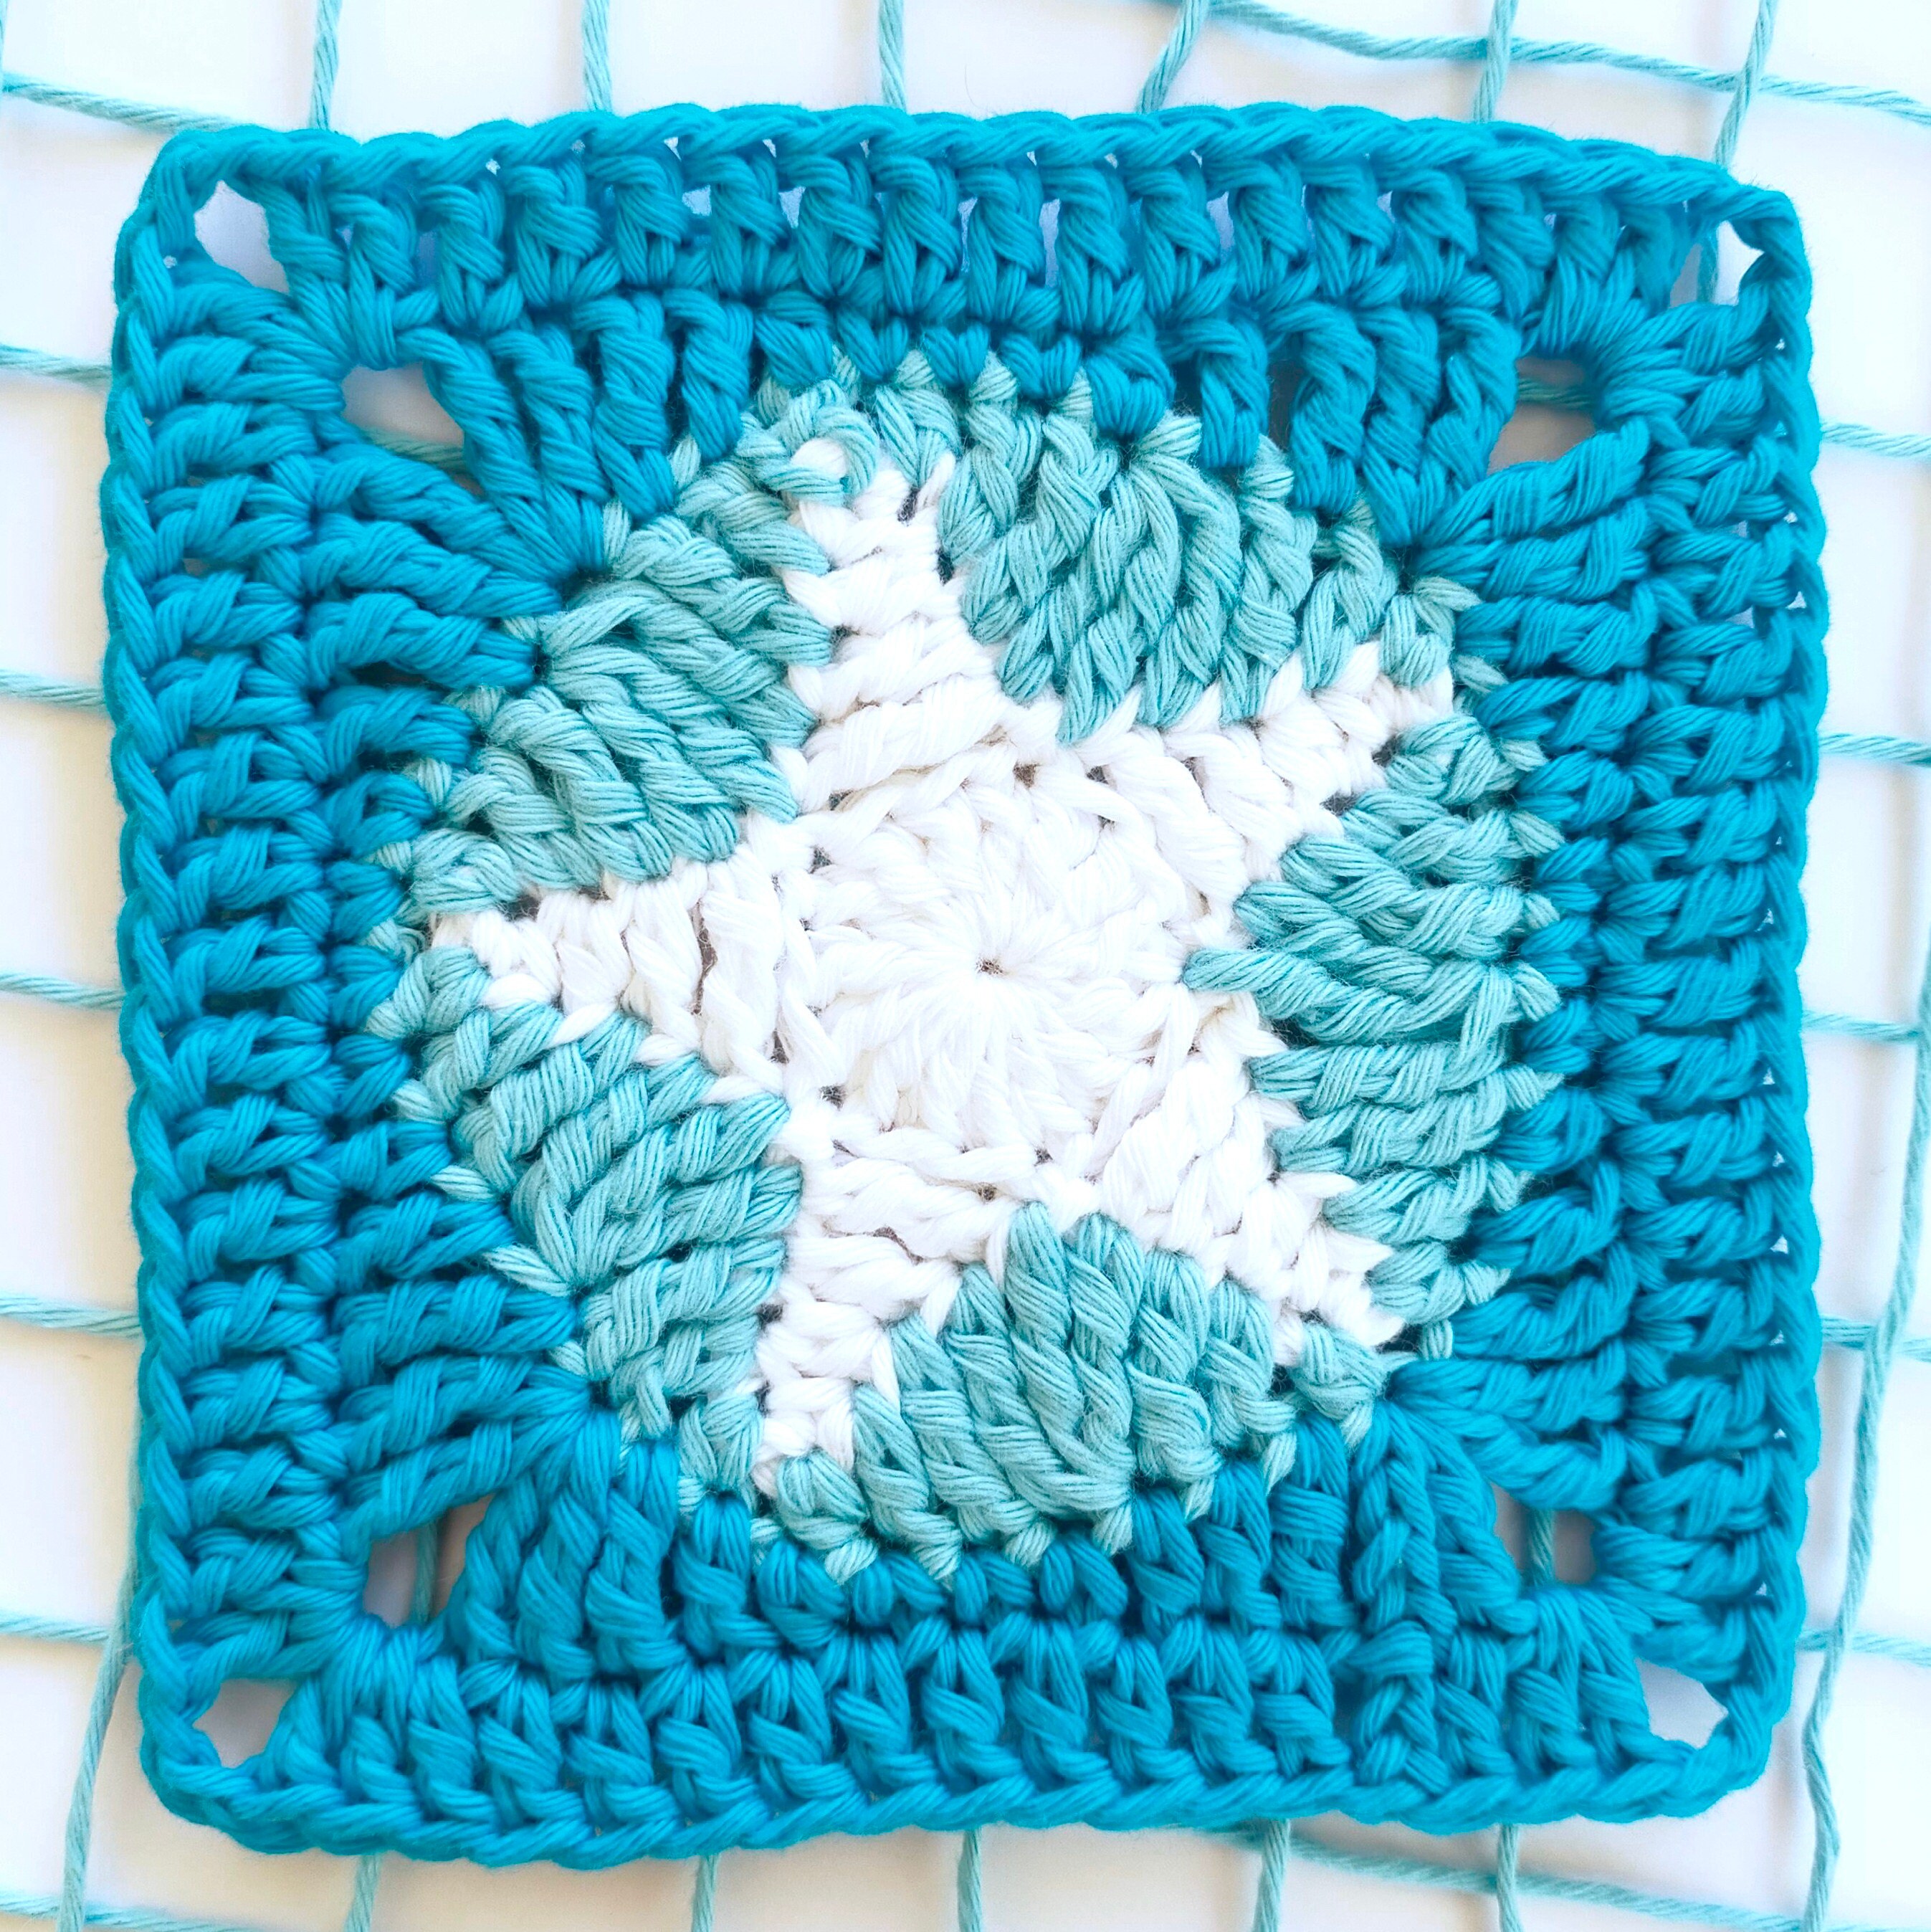 Granny Square Pattern Star Granny Square Crochet Blanket 